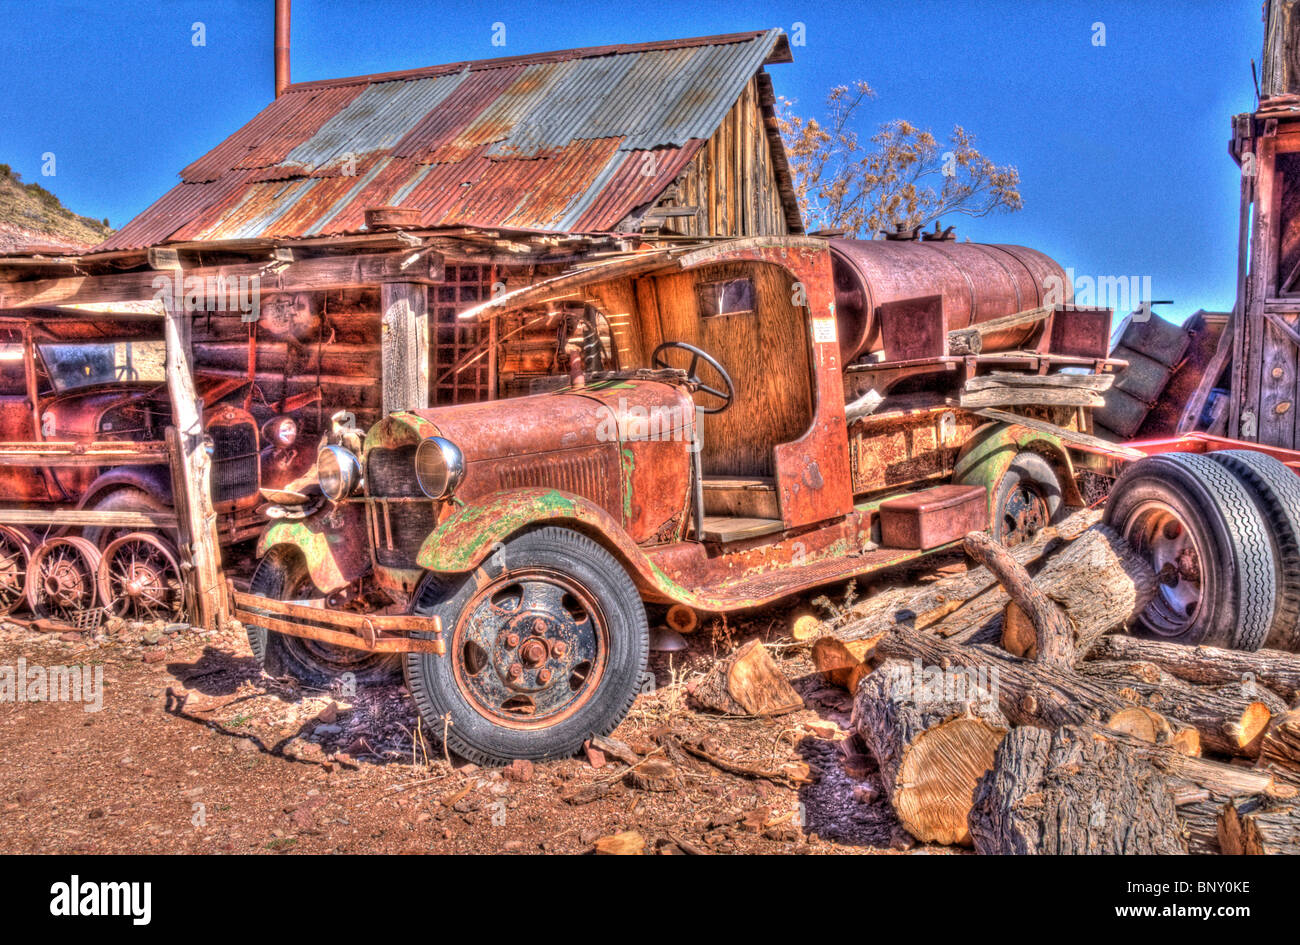 Old Fuel Truck Jerome Arizona Stock Photo